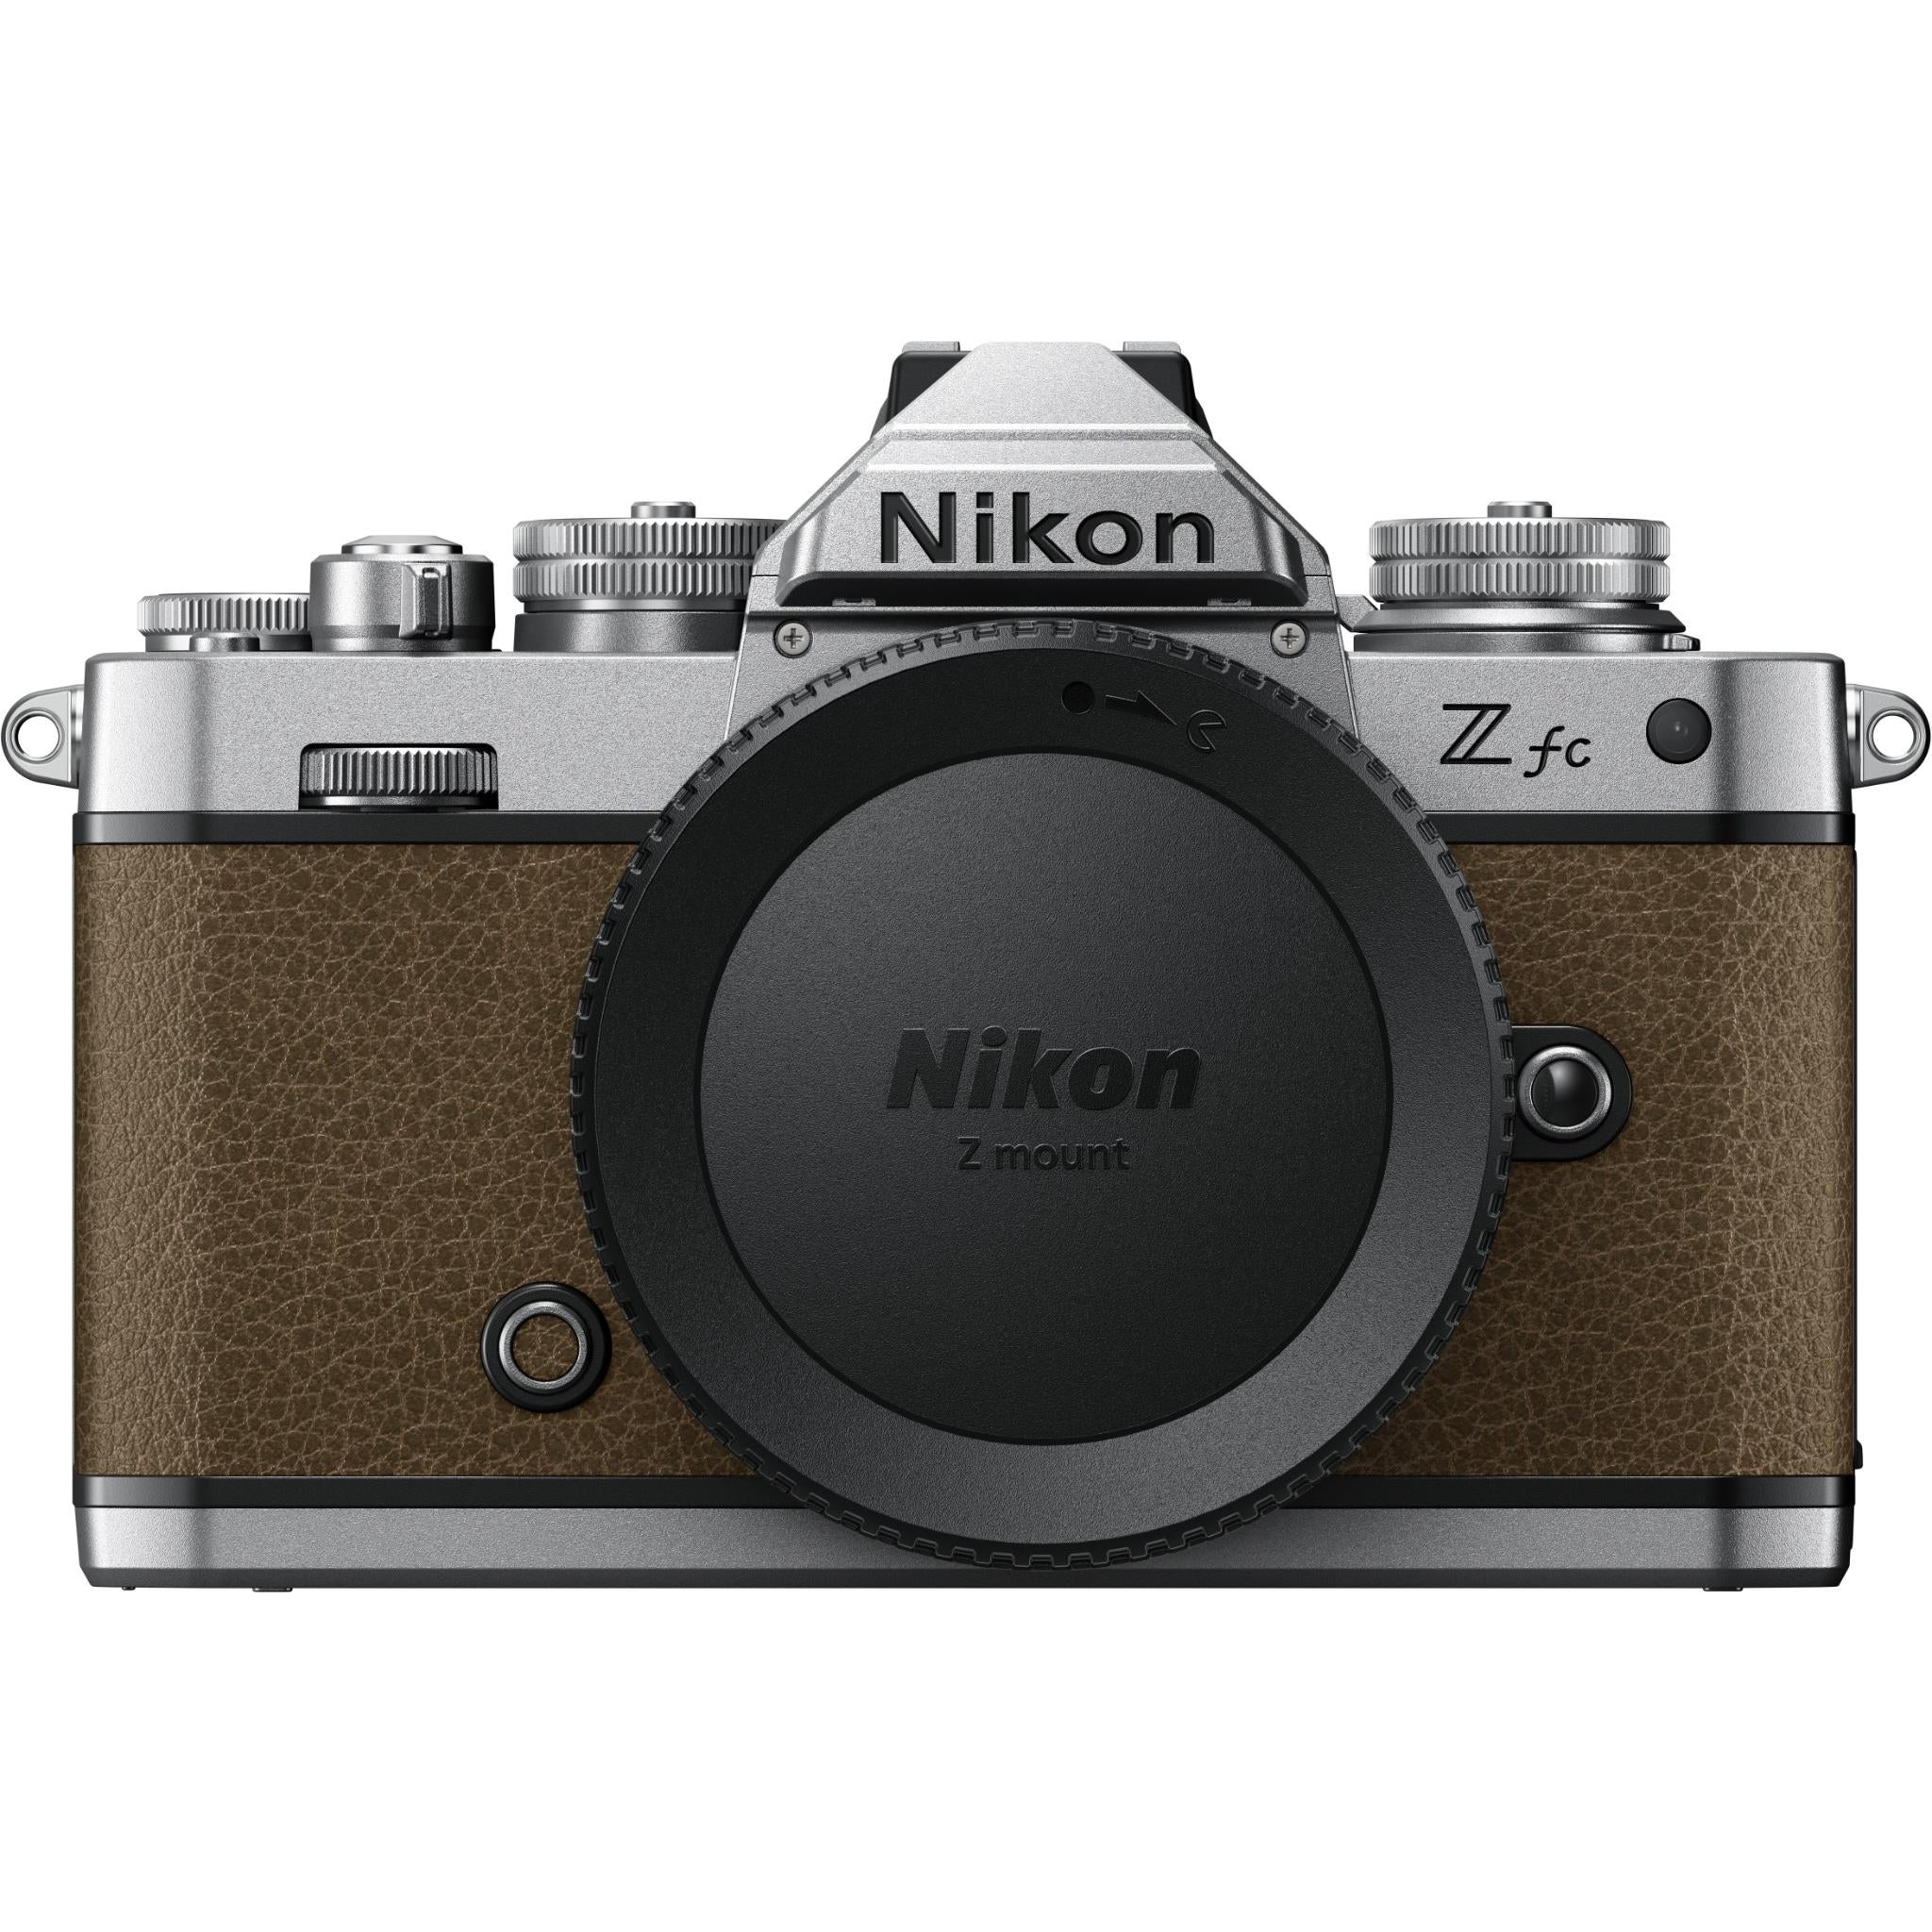  Nikon Z Fc Mirrorless Camera (Body Only) [Walnut Brown]